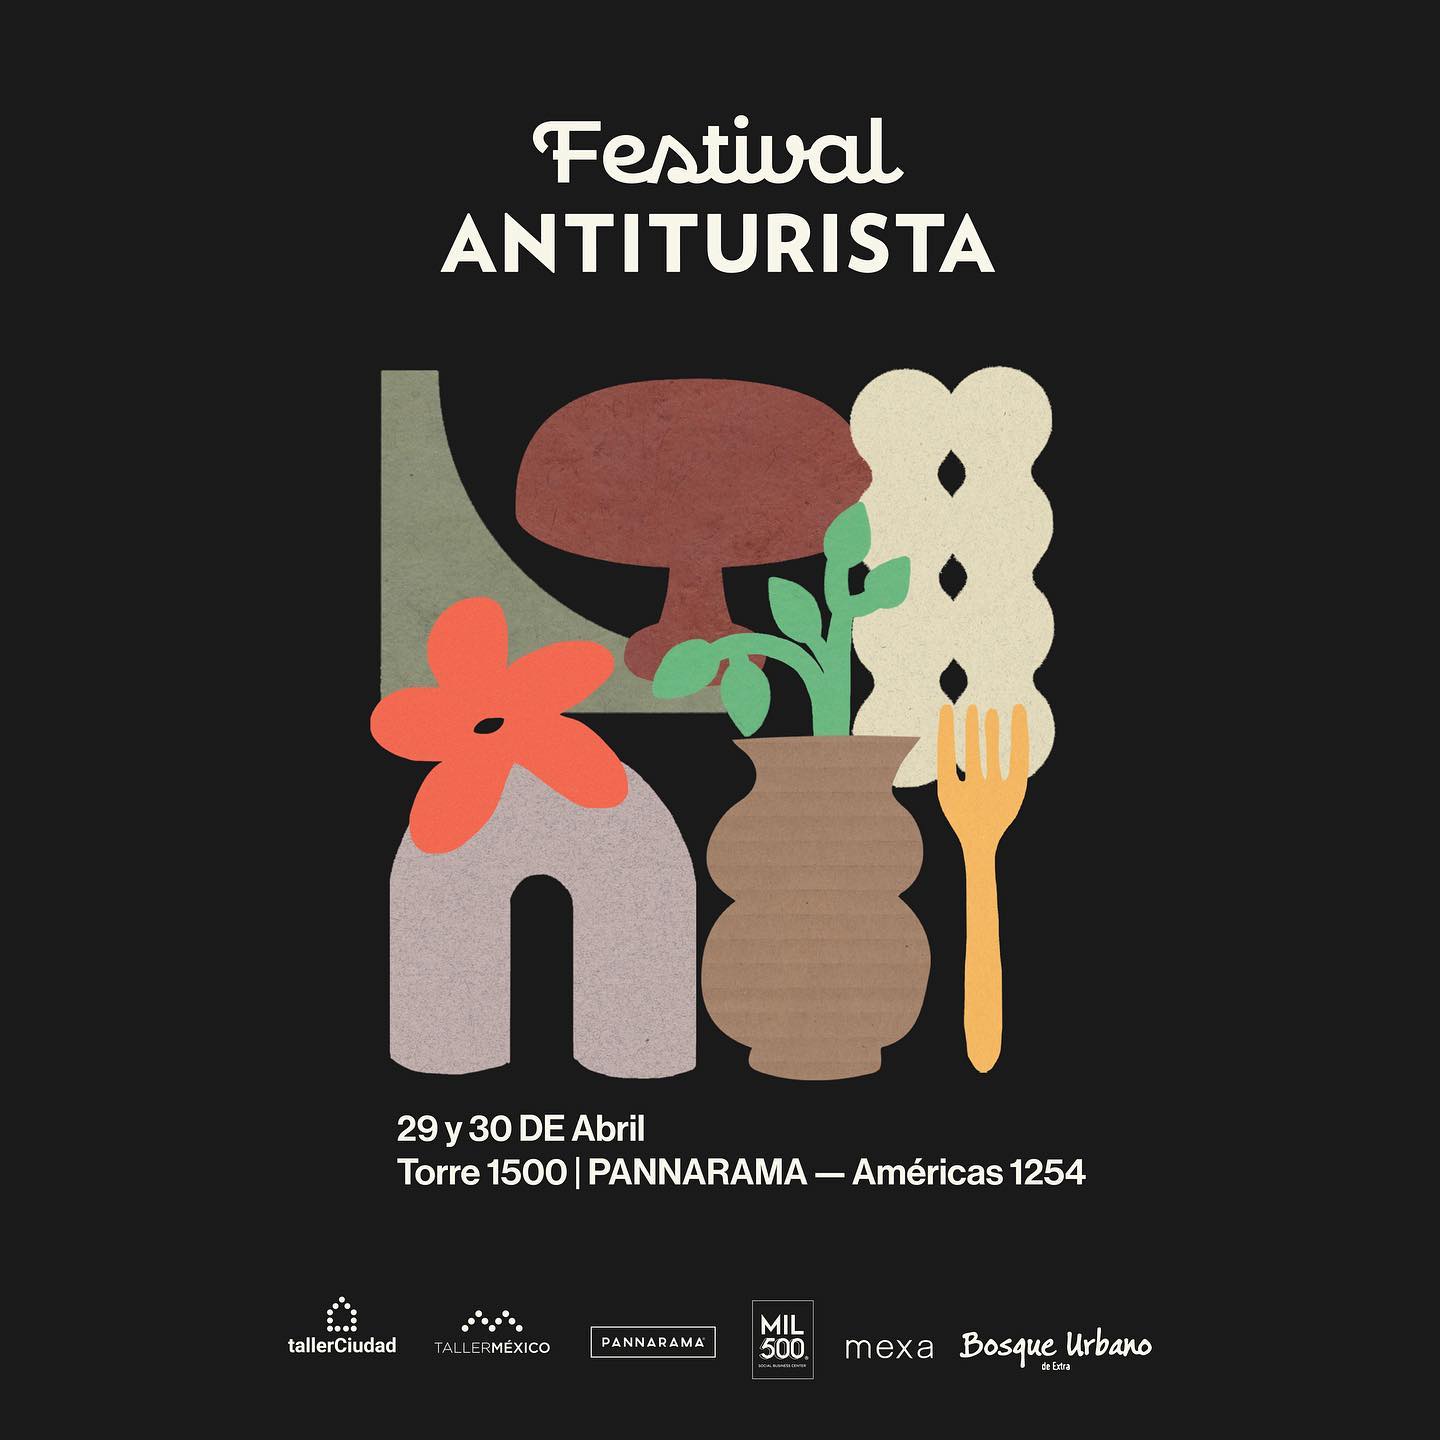 festival antiturista en guadalajara fechas